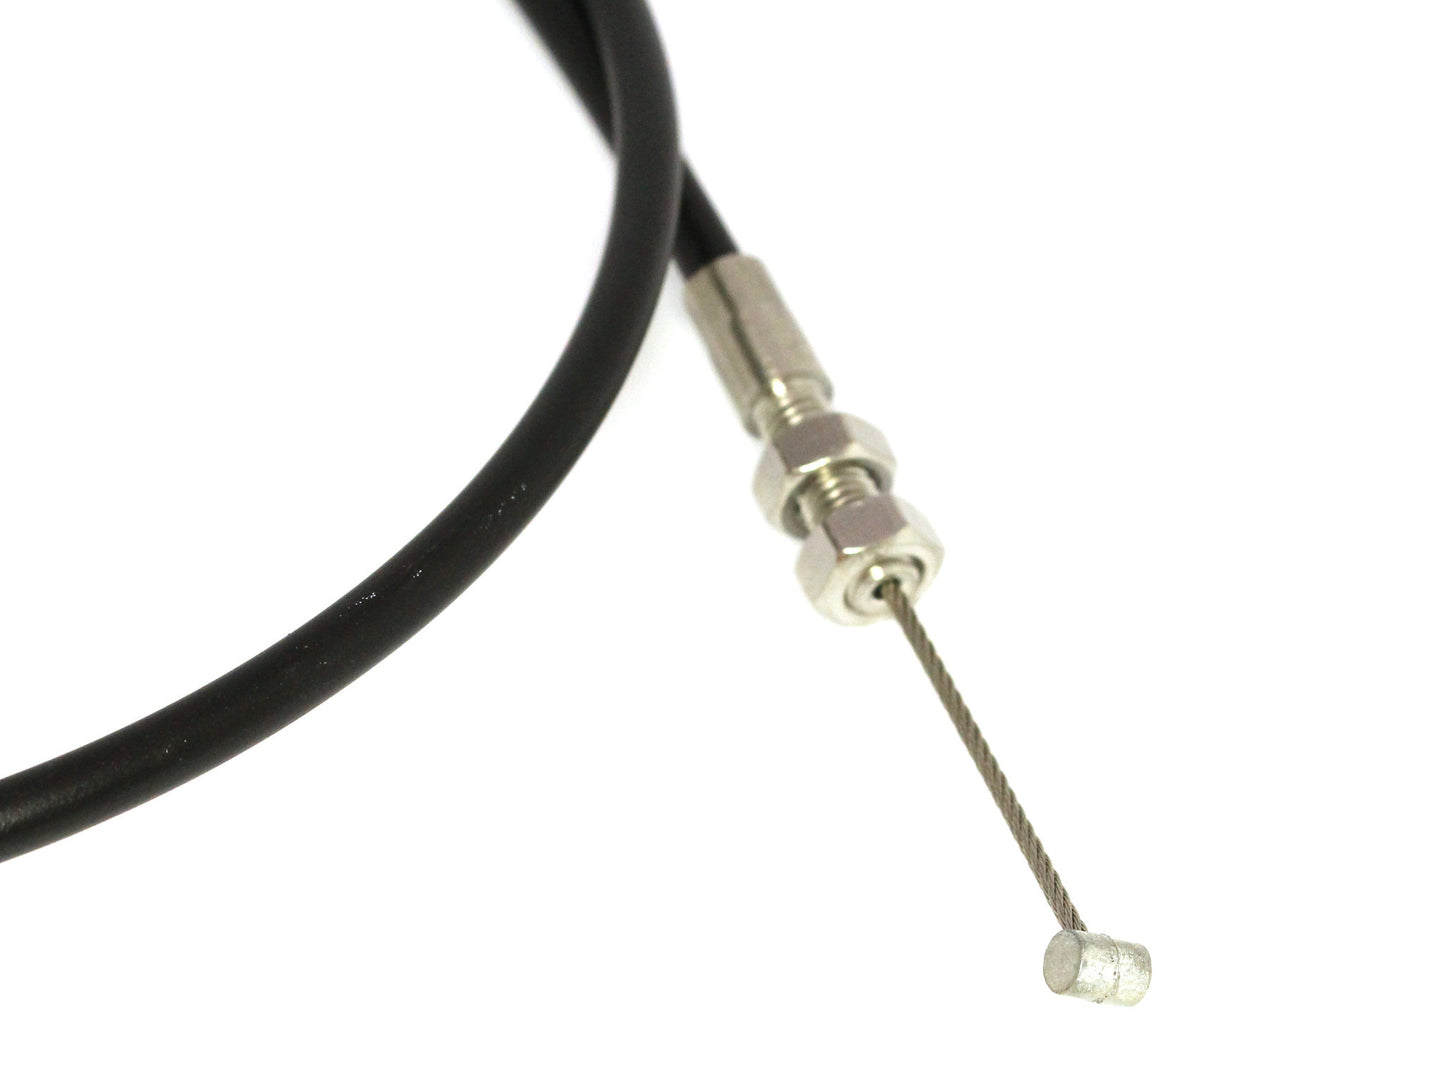 Aftermarket Trim Cable JSP Brand YC-38 Replacement for Yamaha F0D-U153D-01-00/F0D-U153D-00-00 - 2 Pack